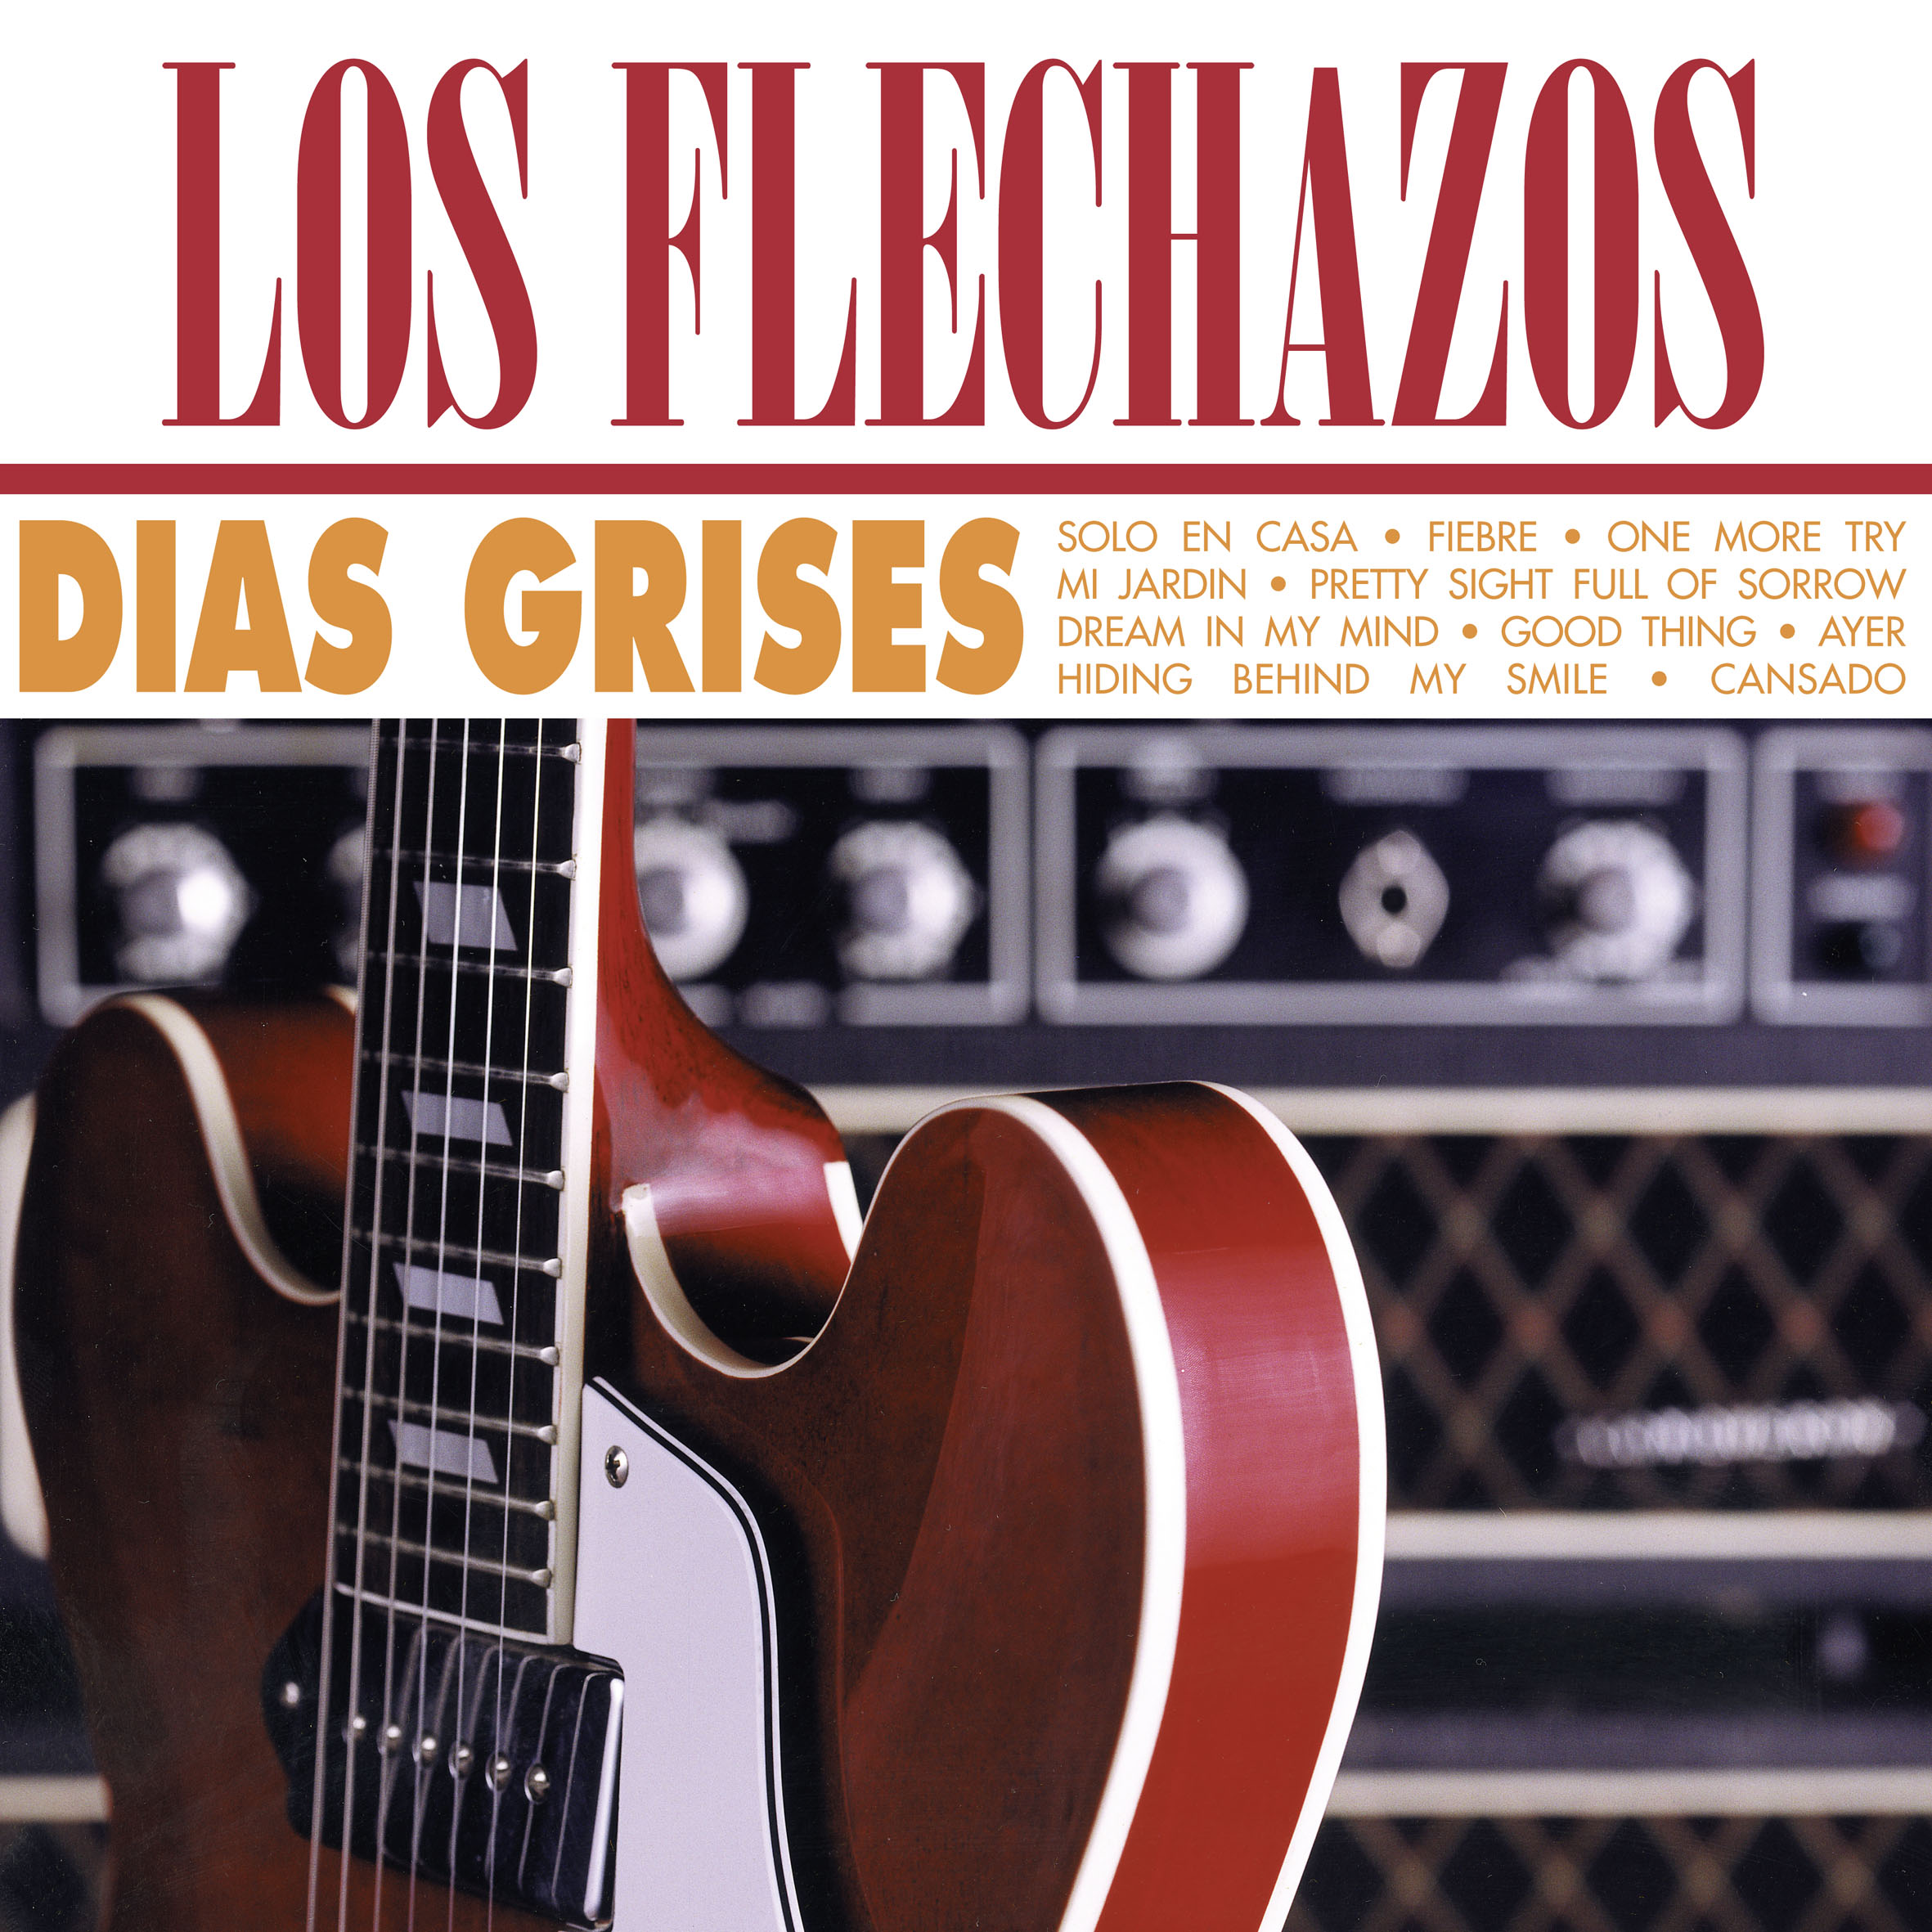 Los Flechazos "Días Grises" Elefant Records 25th Anniversary Collection